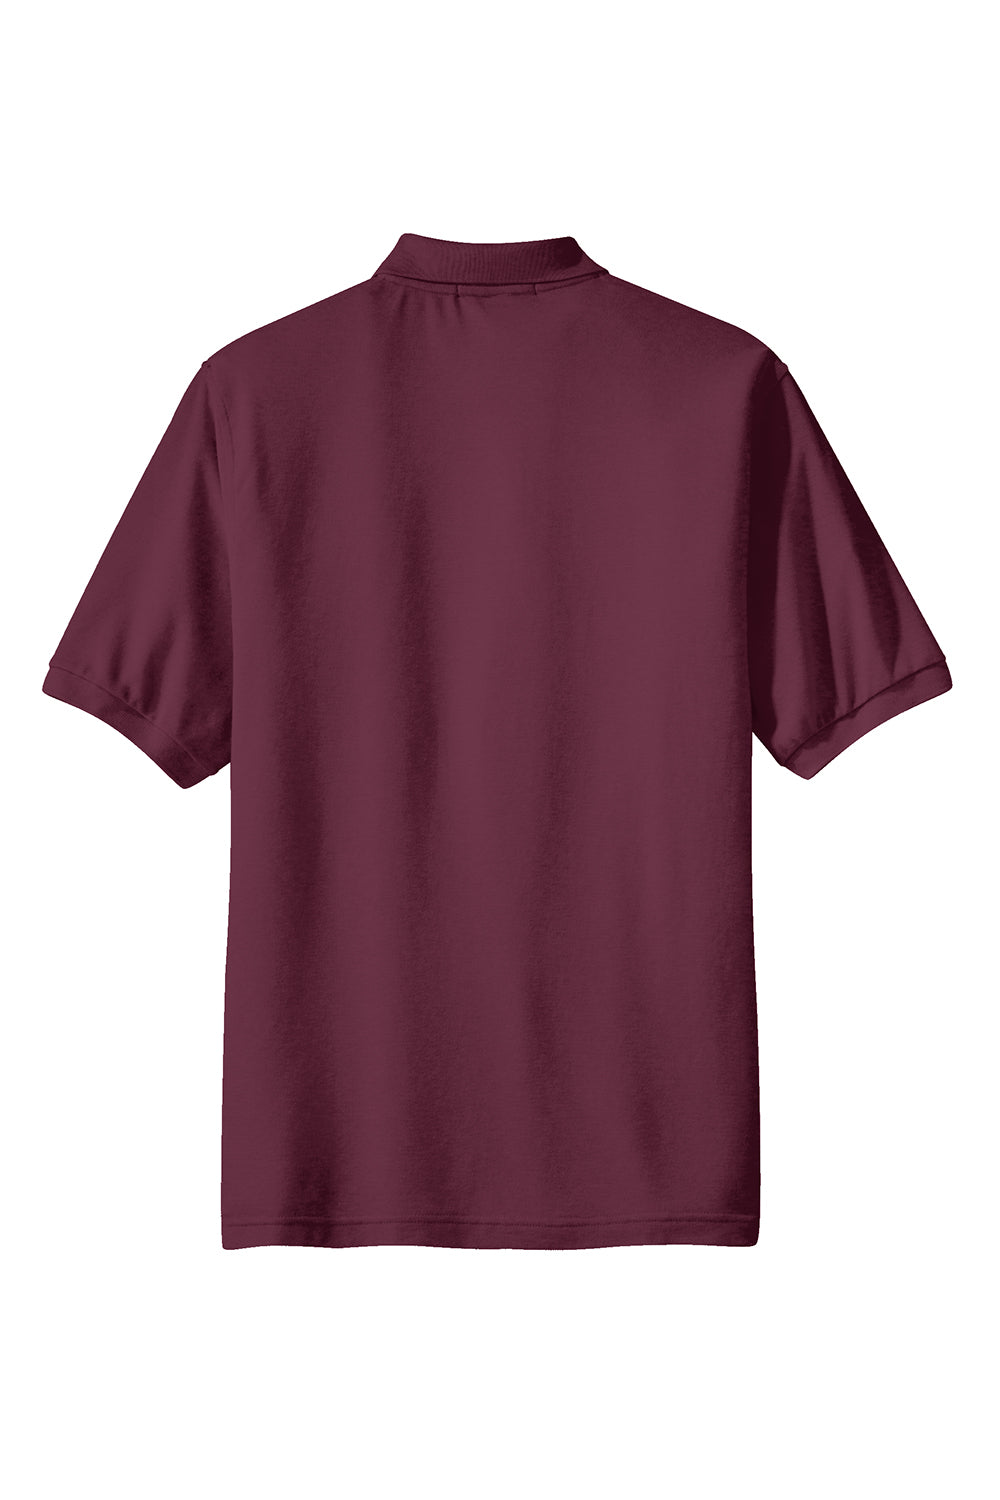 Port Authority K500P Mens Silk Touch Wrinkle Resistant Short Sleeve Polo Shirt w/ Pocket Burgundy Flat Back